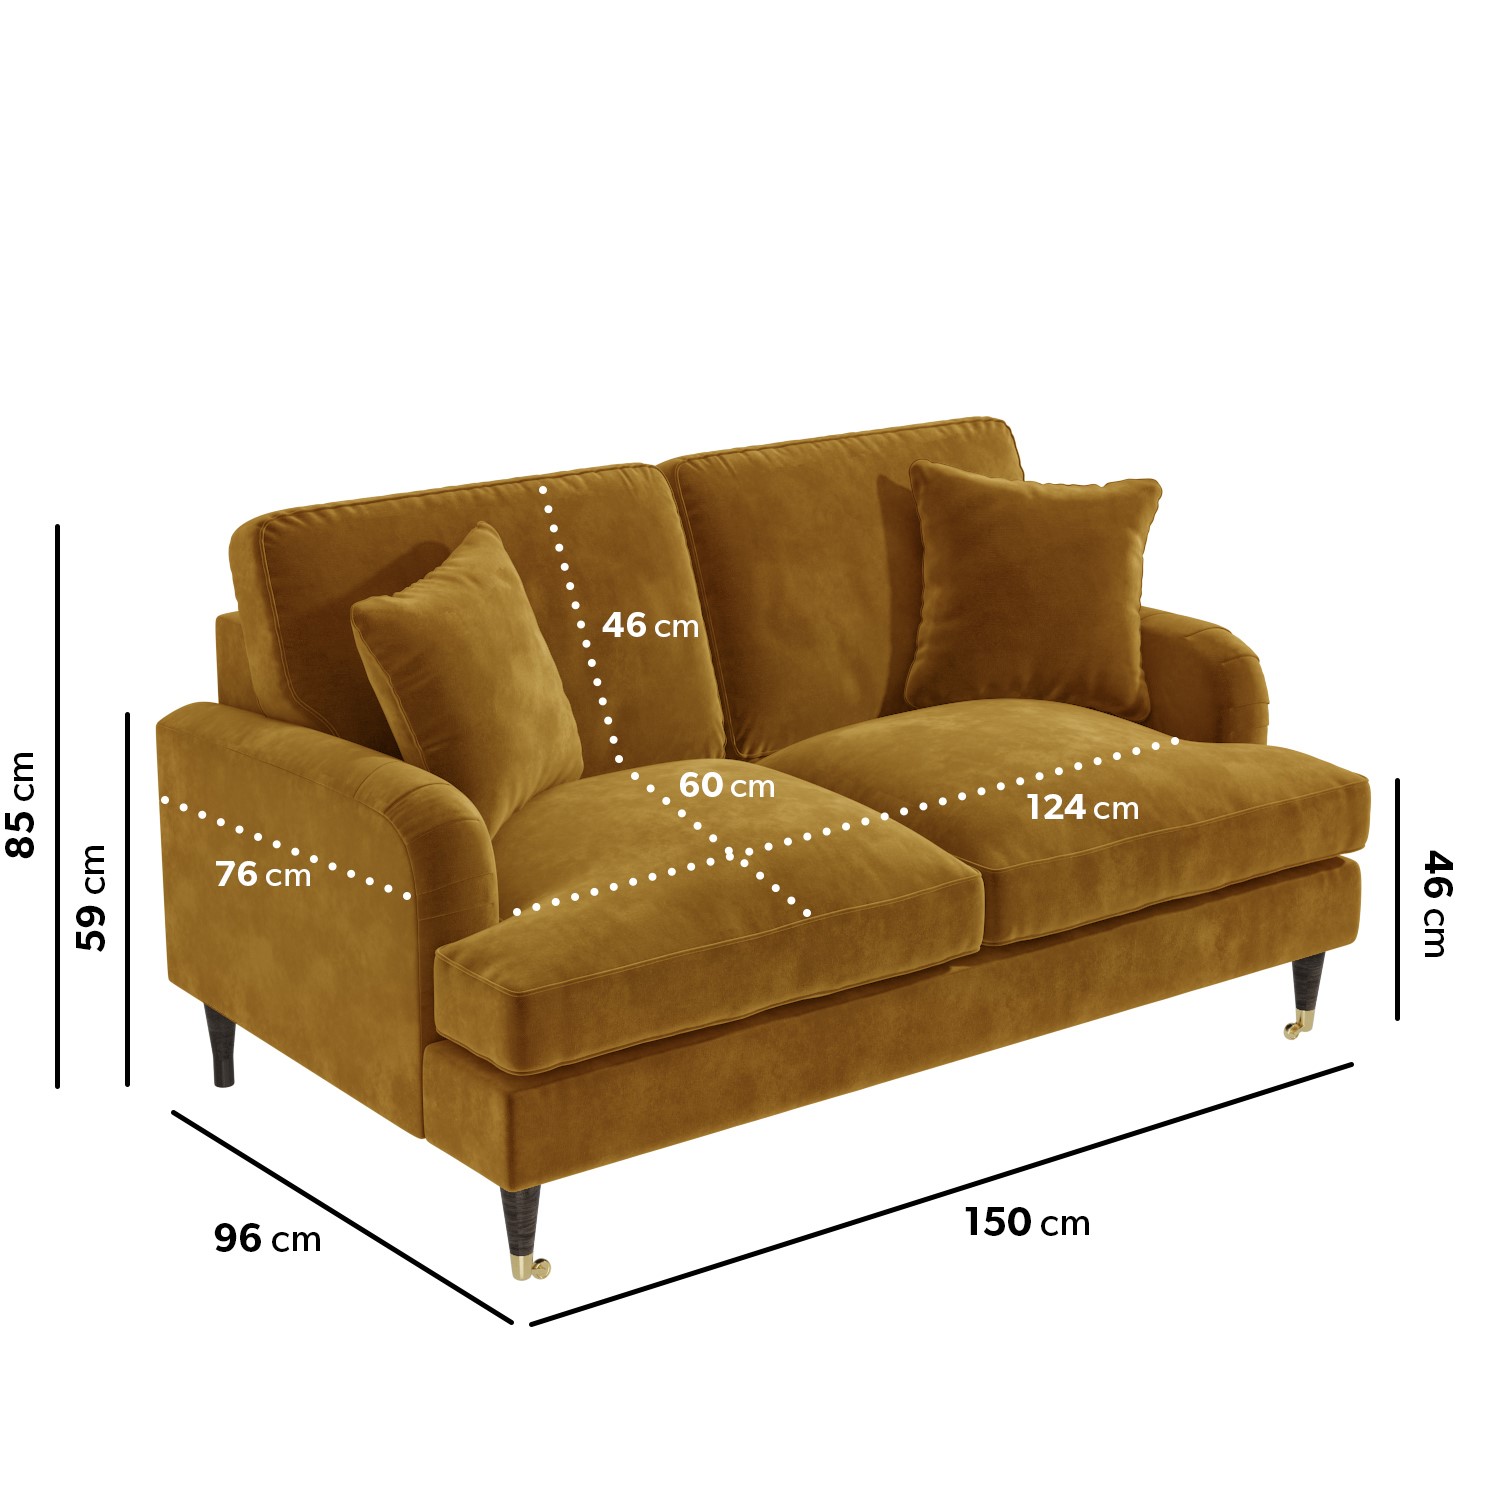 Read more about Mustard velvet 2 seater sofa payton